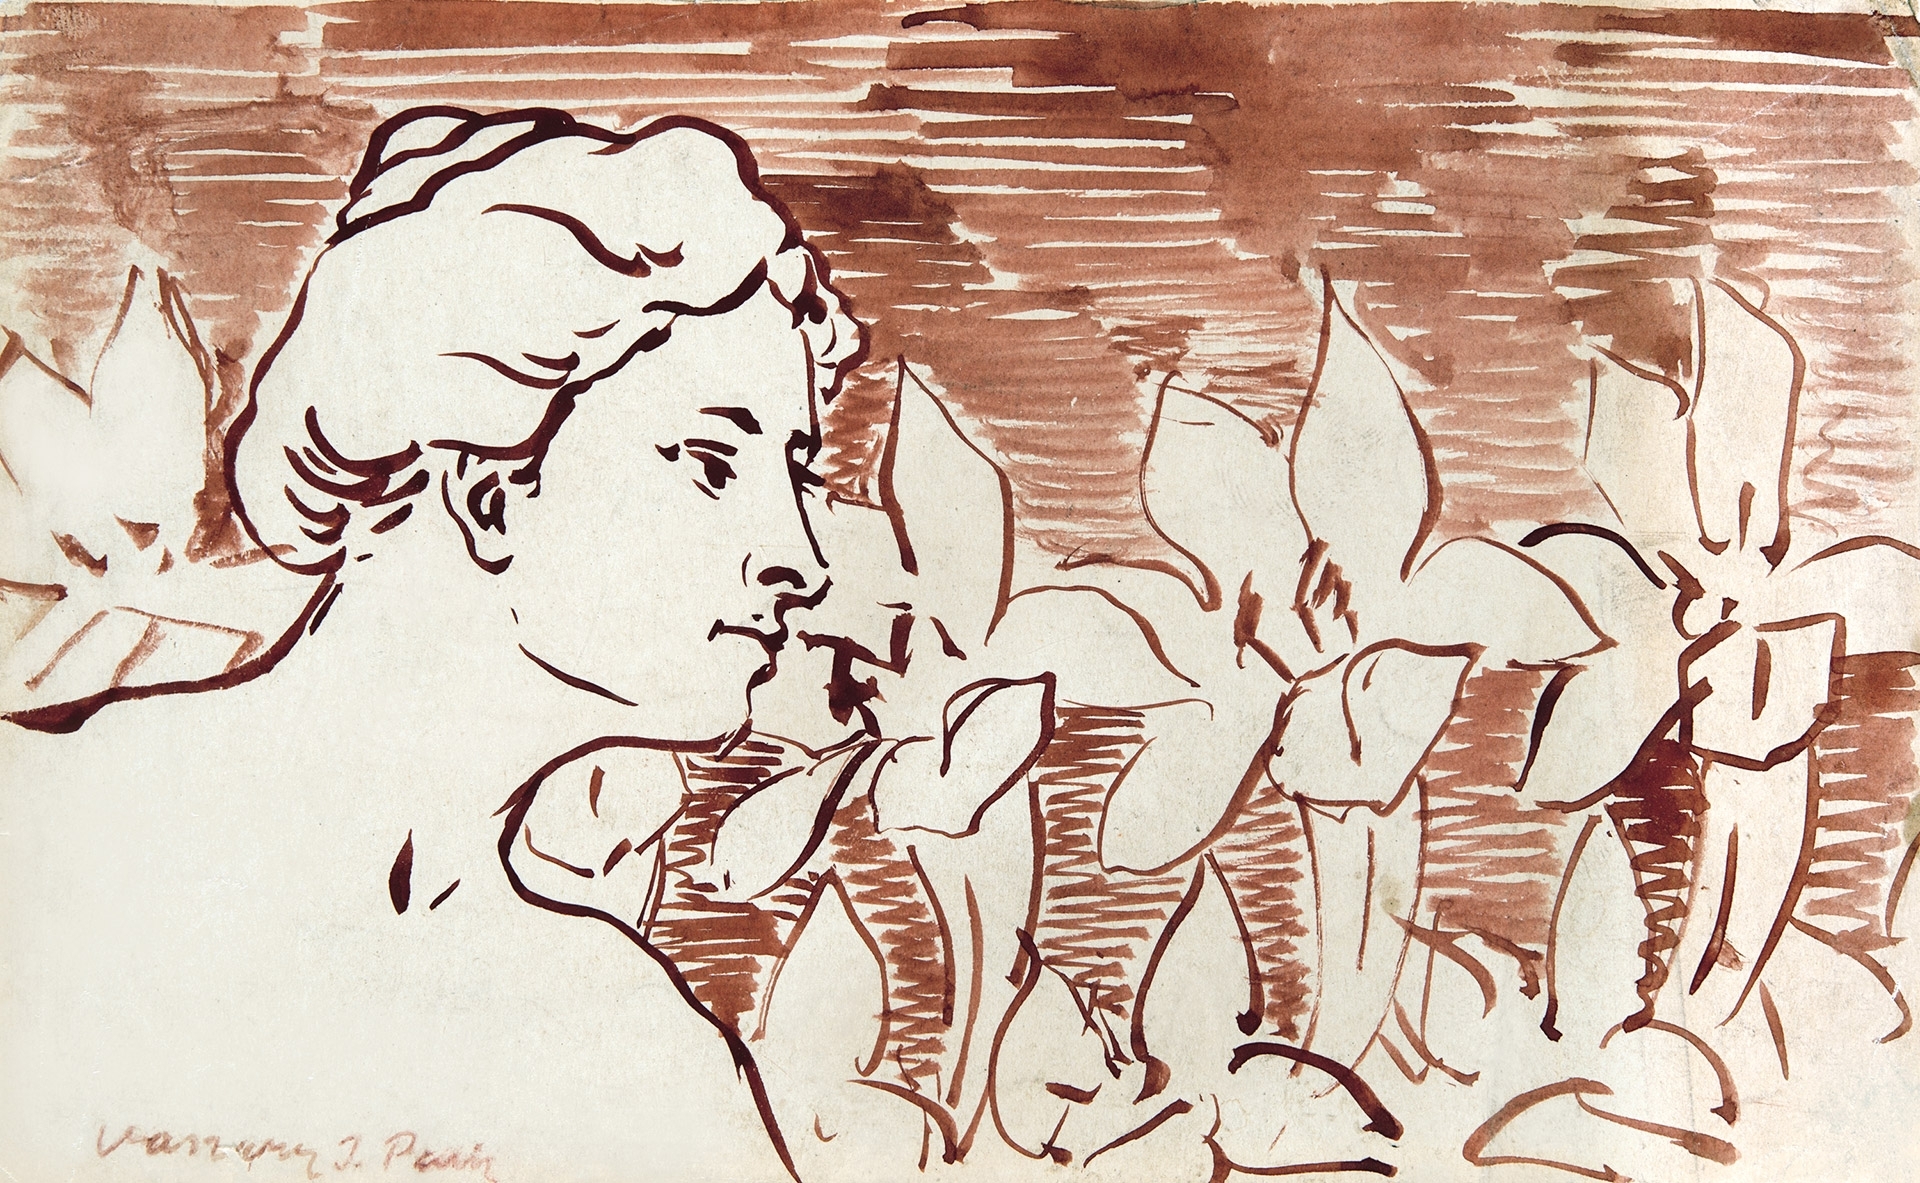 Vaszary János (1867-1939) Fragrance of Flowers